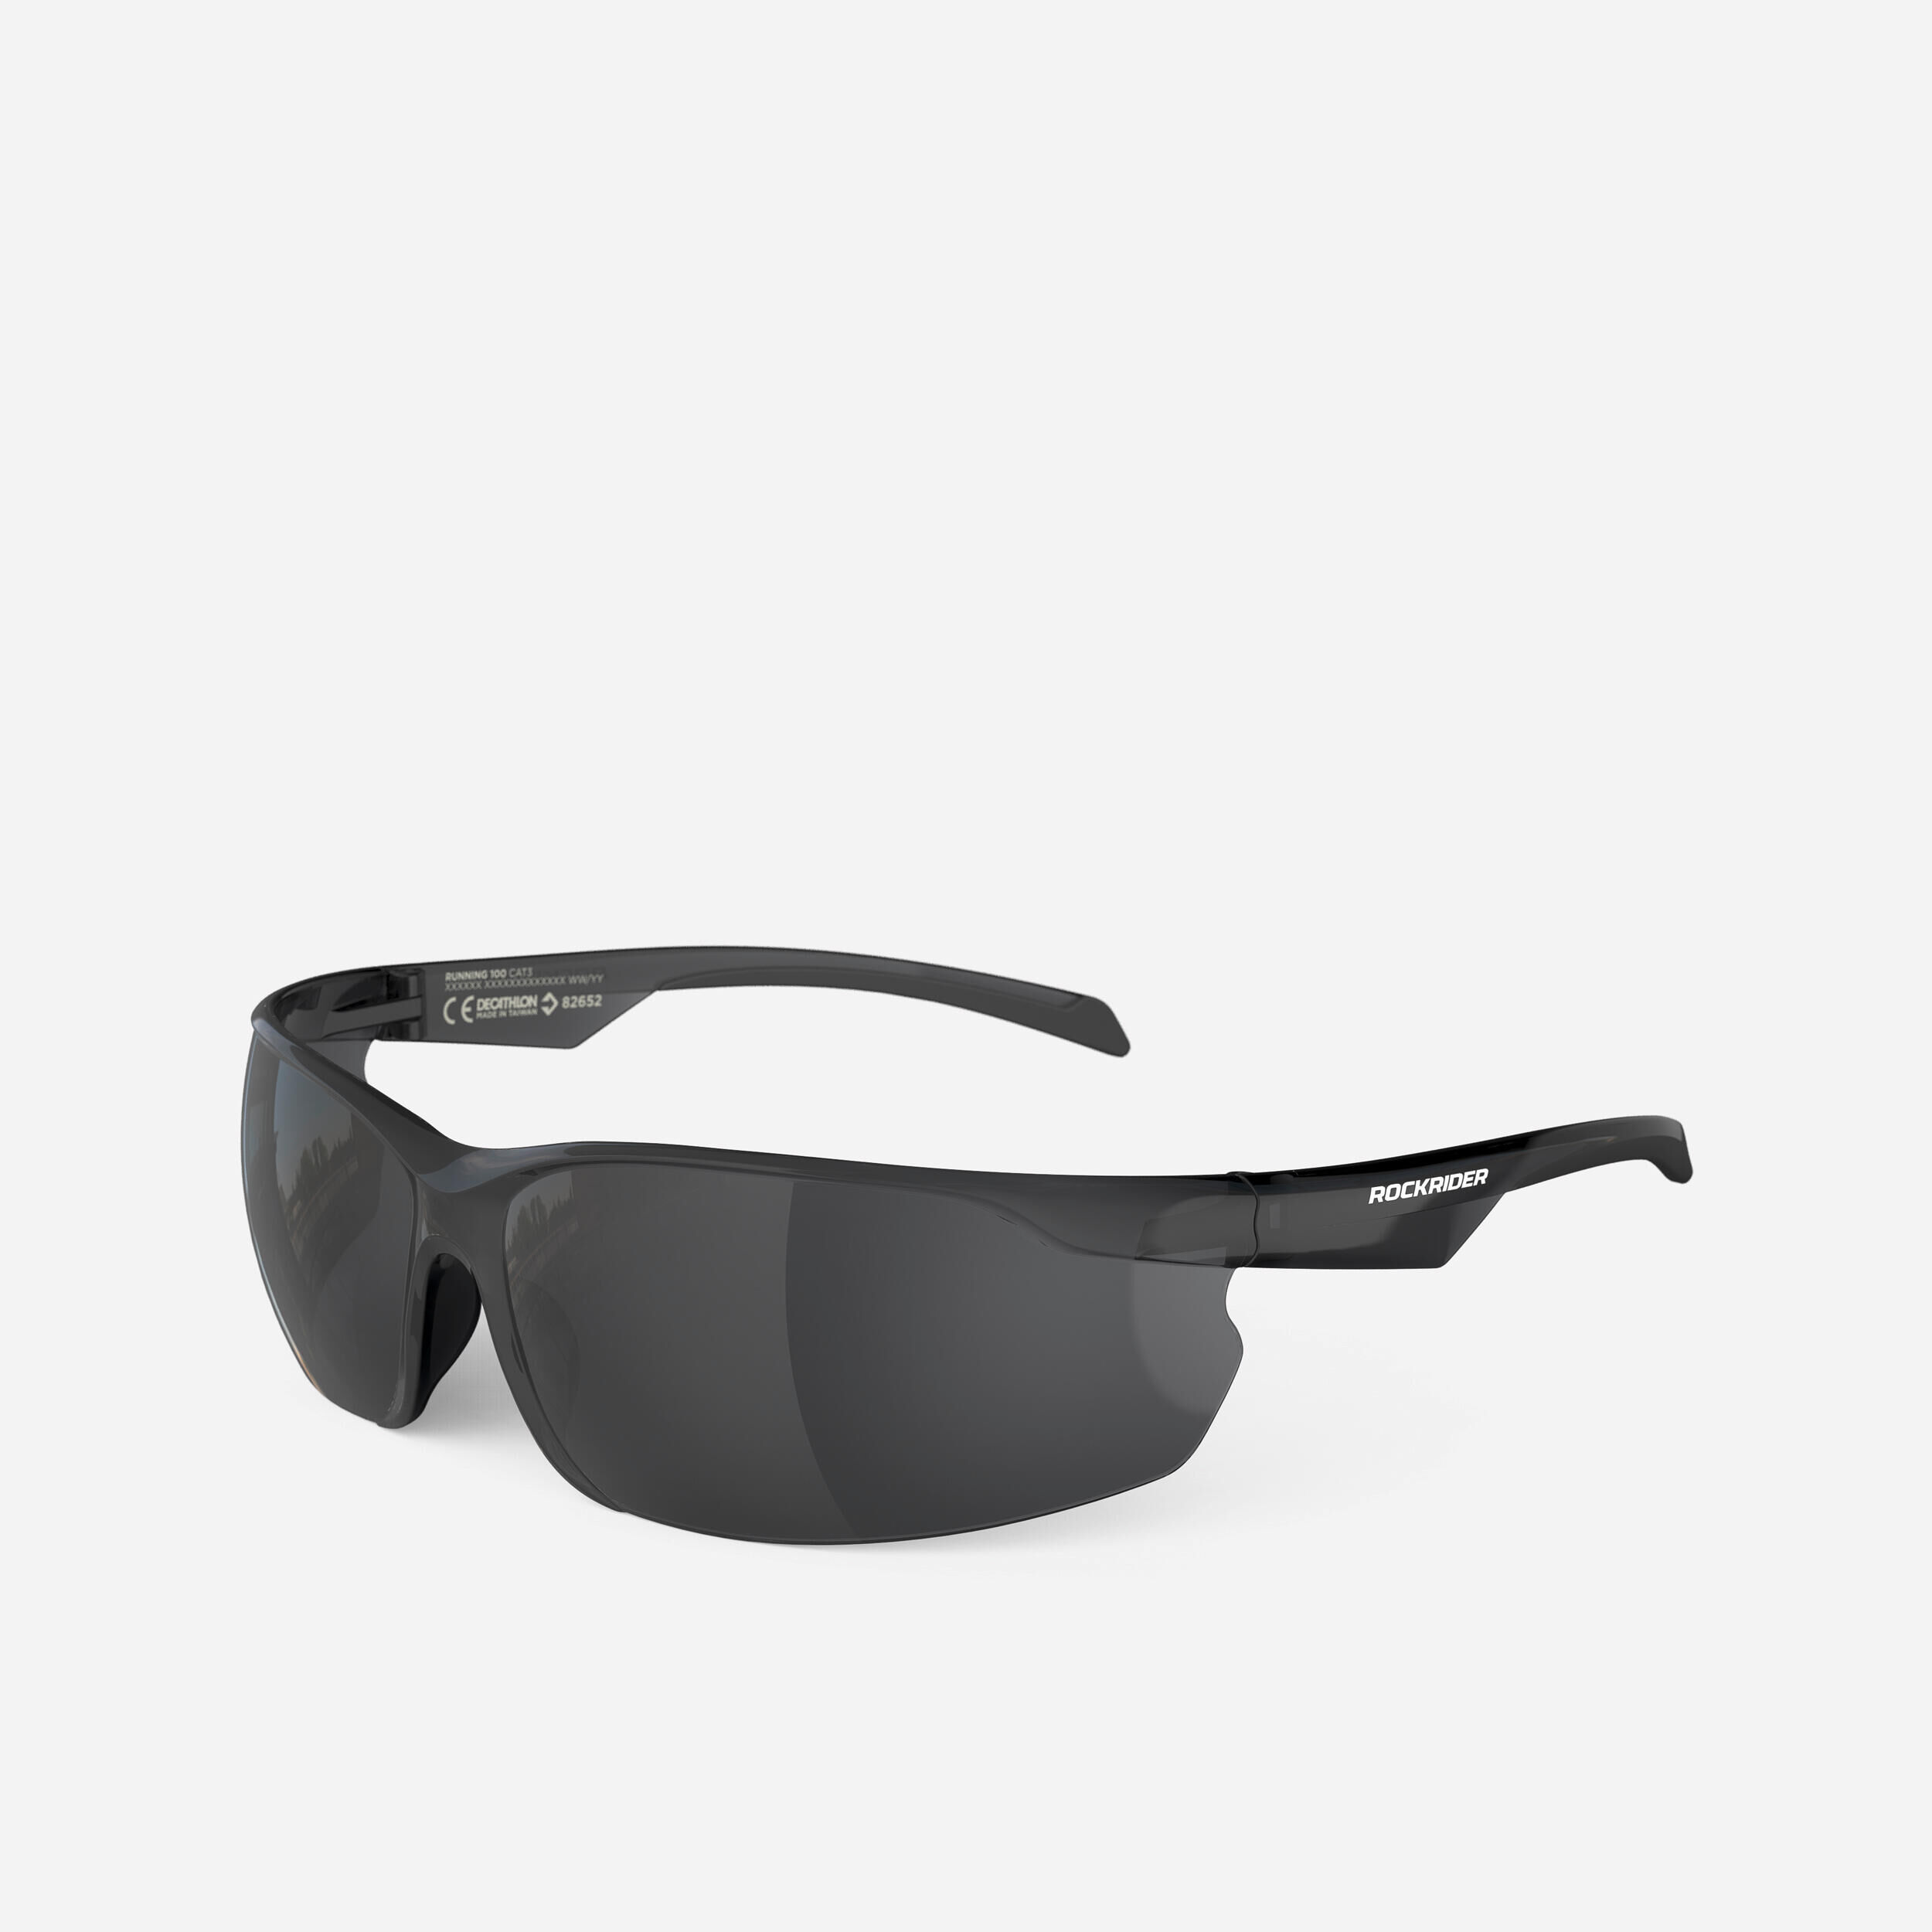 ROCKRIDER ST 100 MTB Sunglasses Category 3 - Grey